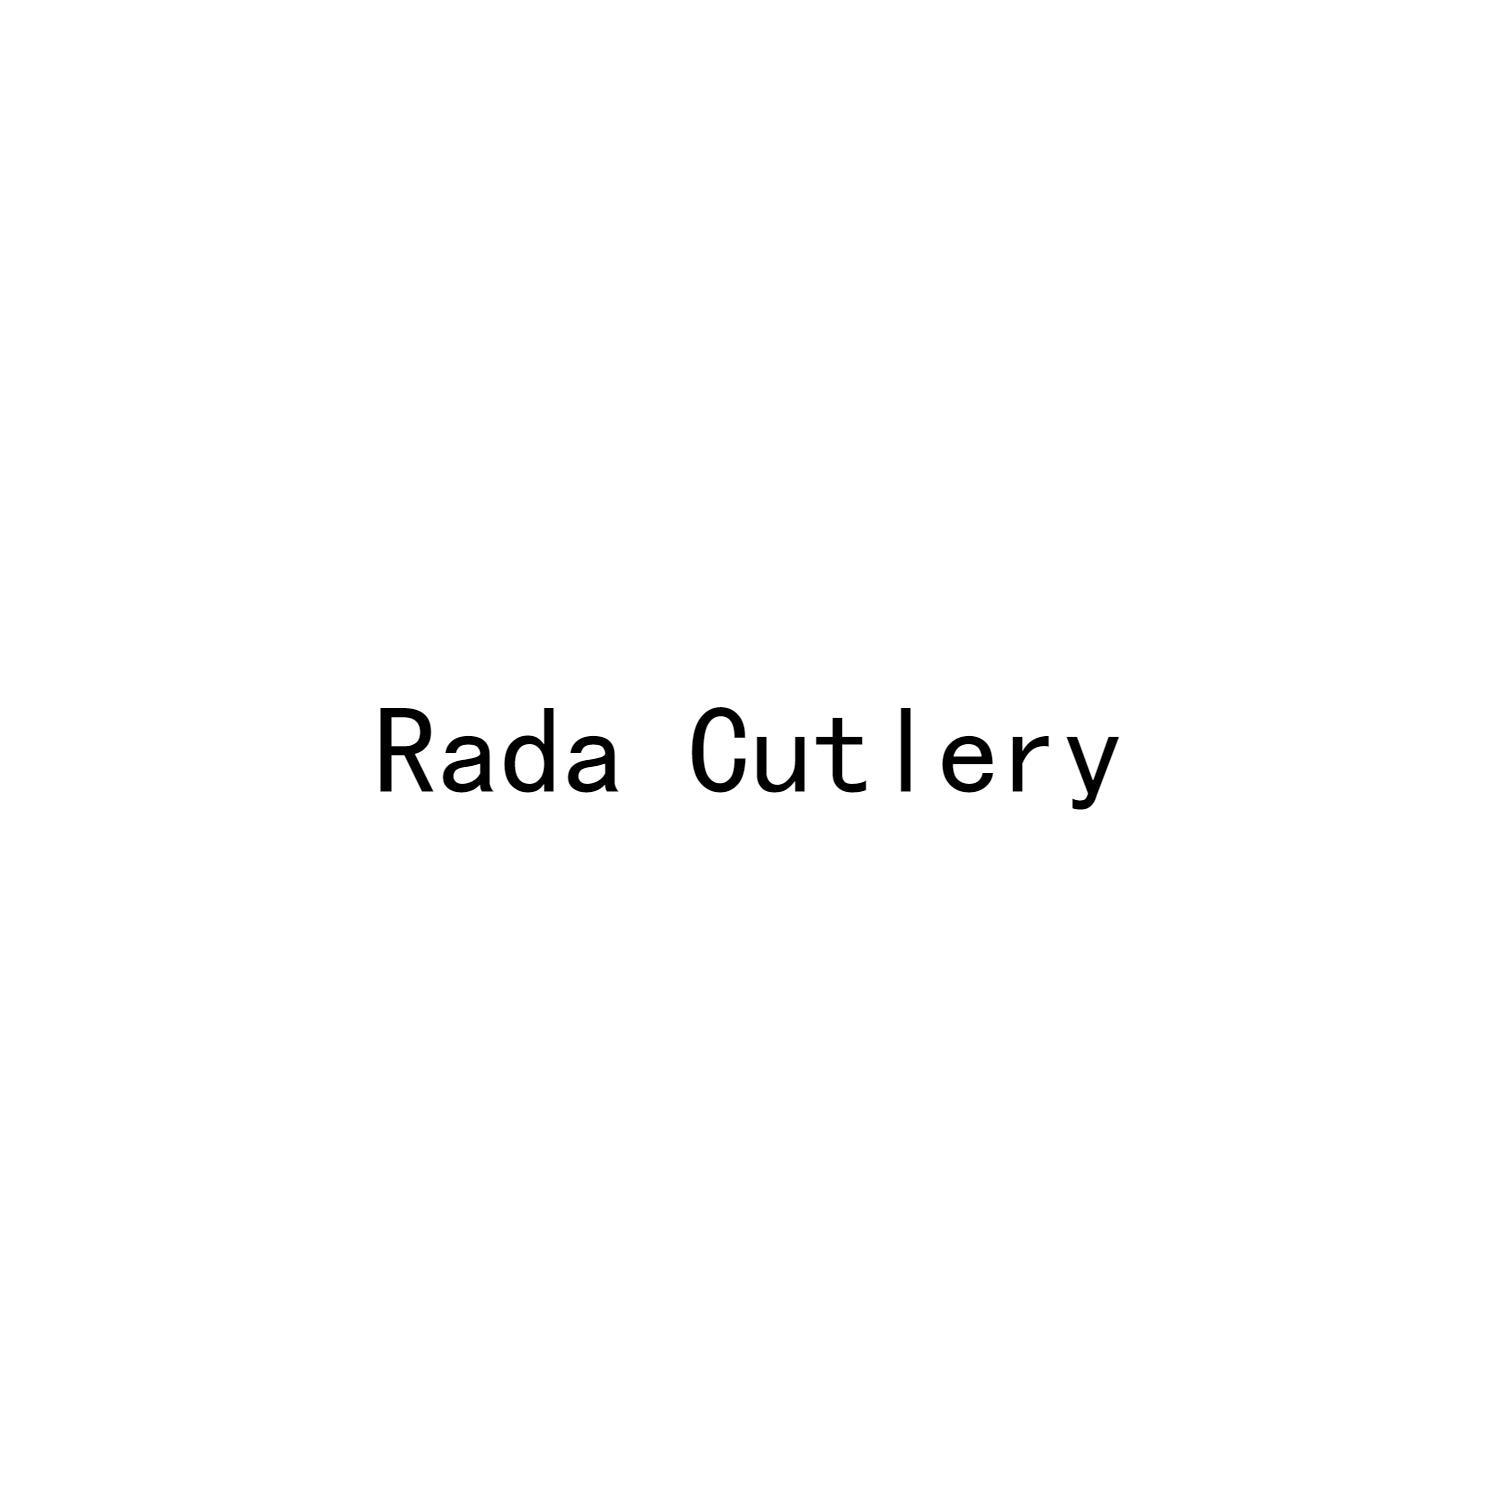 RADA CUTLERY